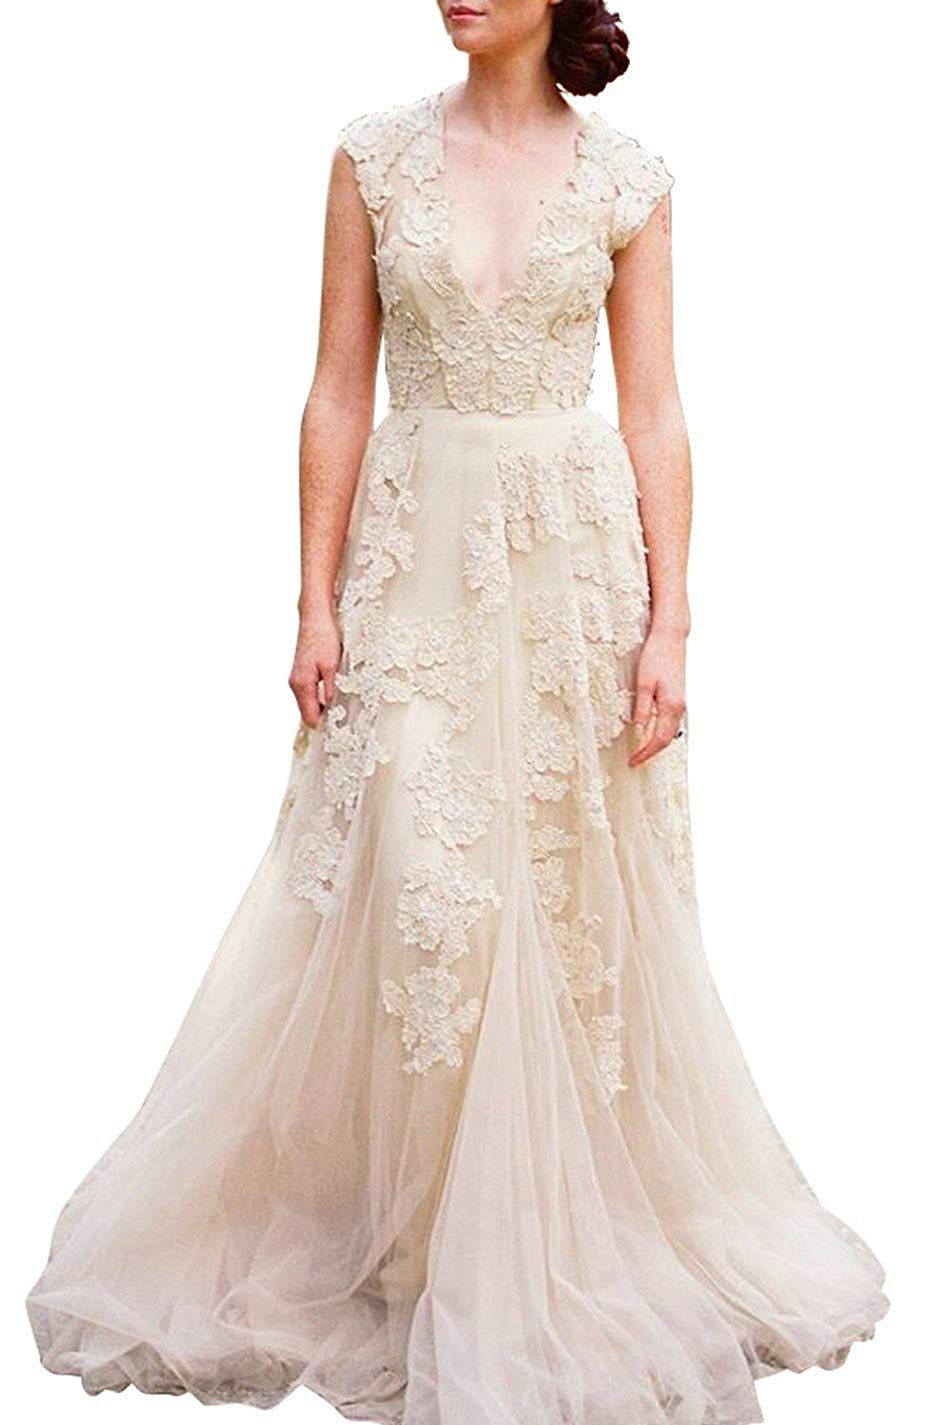 8 Amazon Wedding Dresses Under $150 2019